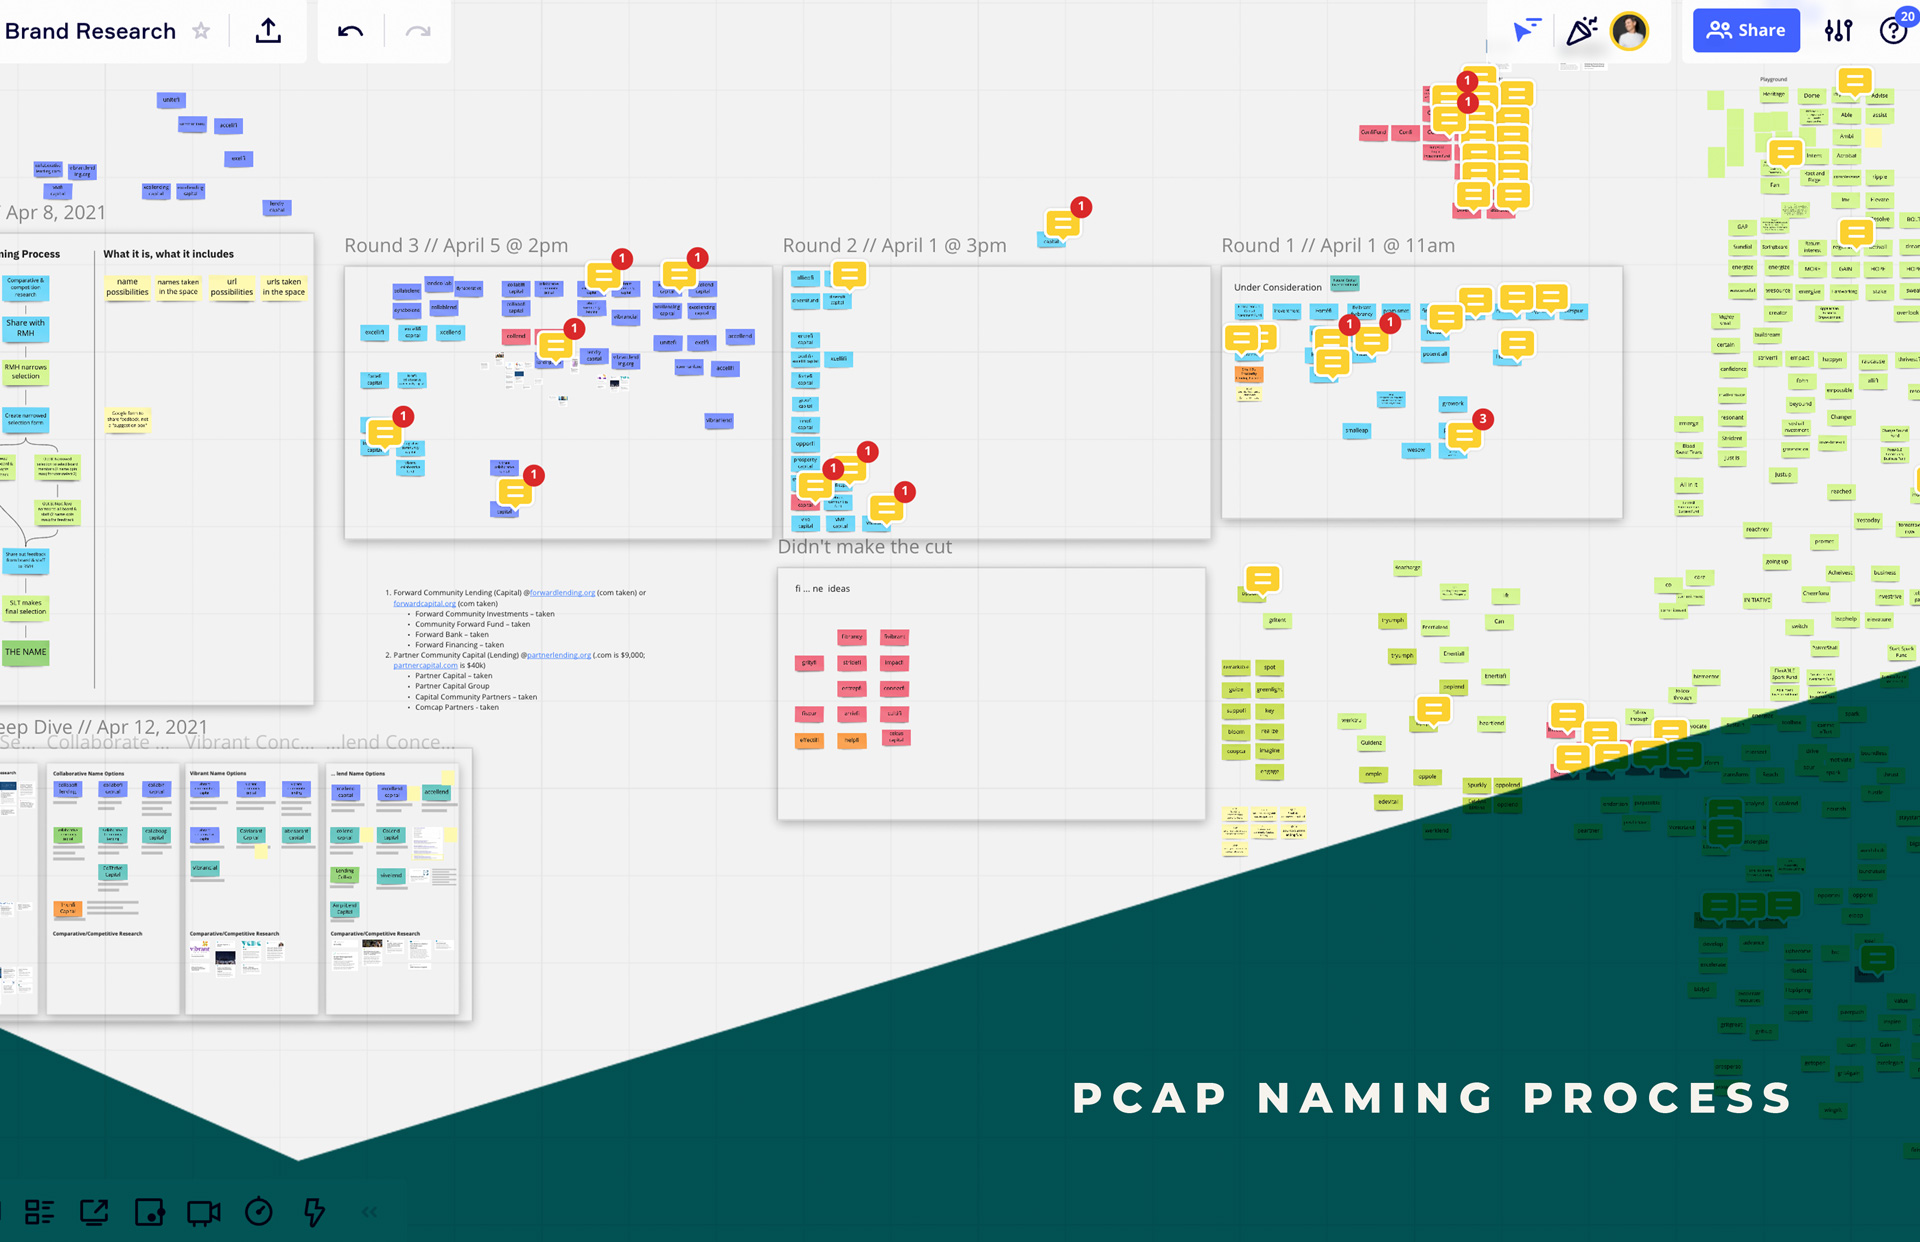 PCAP naming process